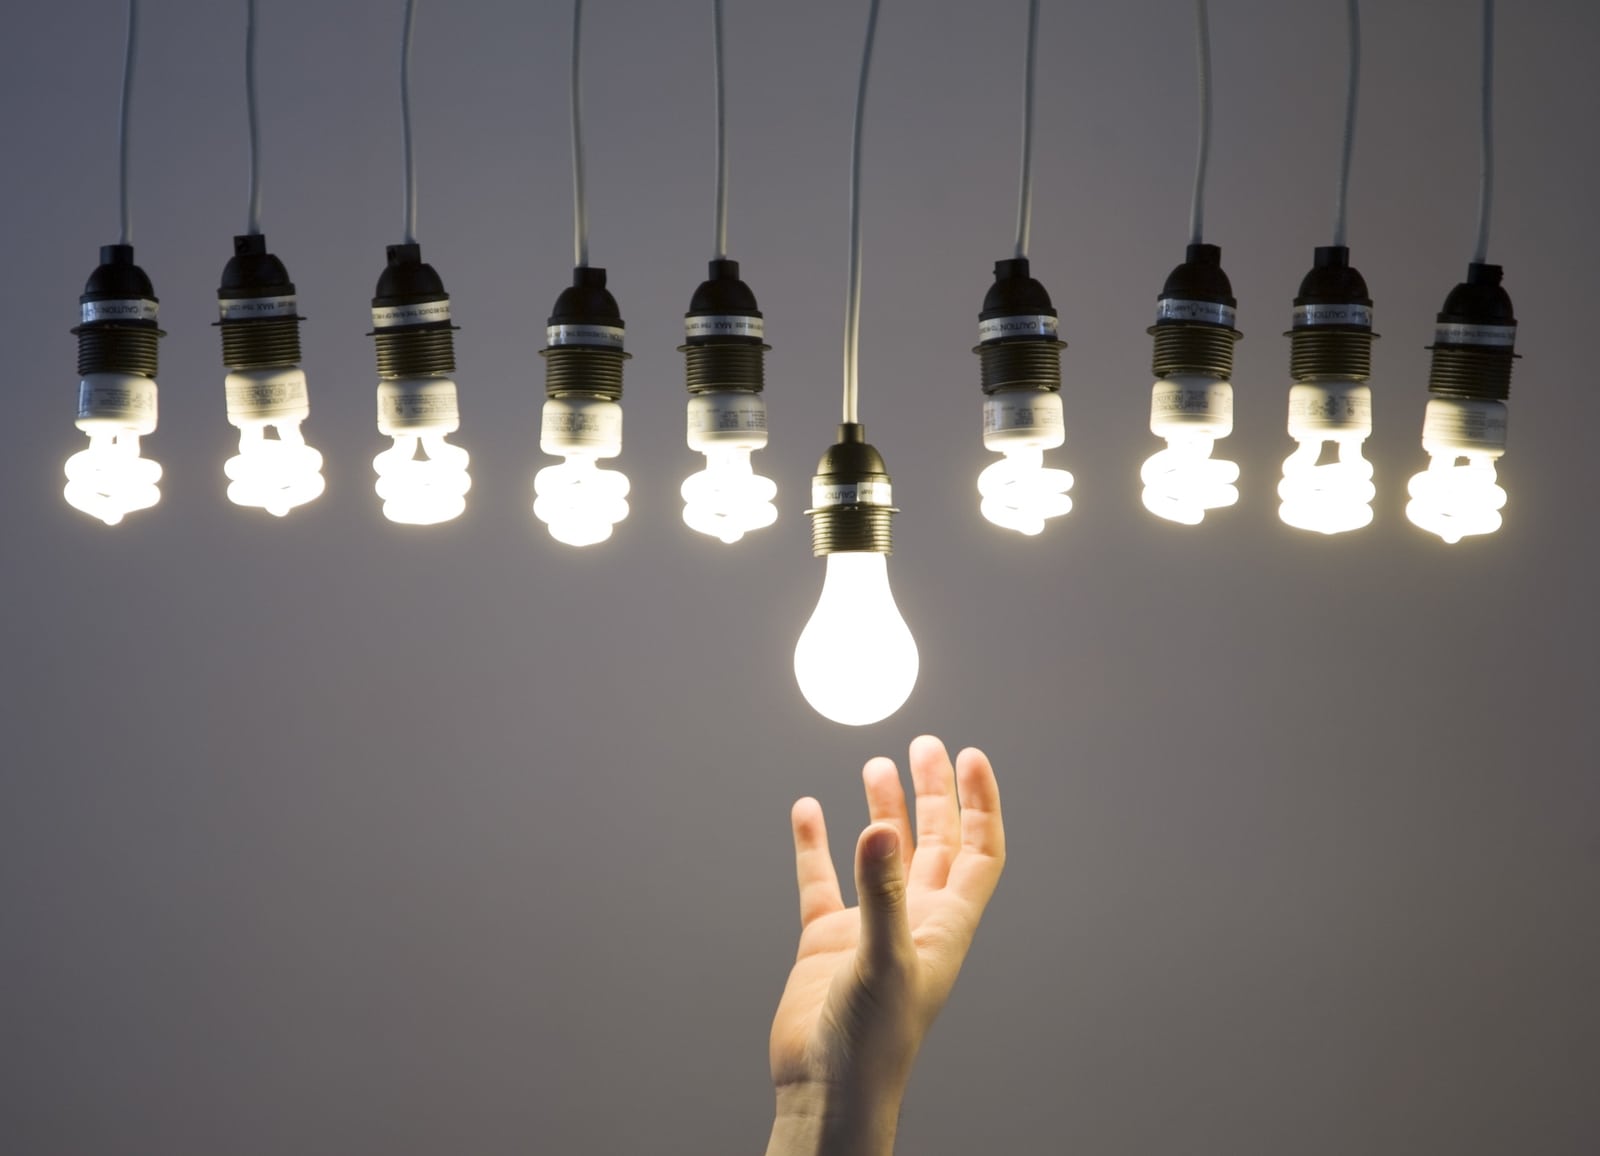 How Many Accountants Does it Take to Change a Lightbulb?